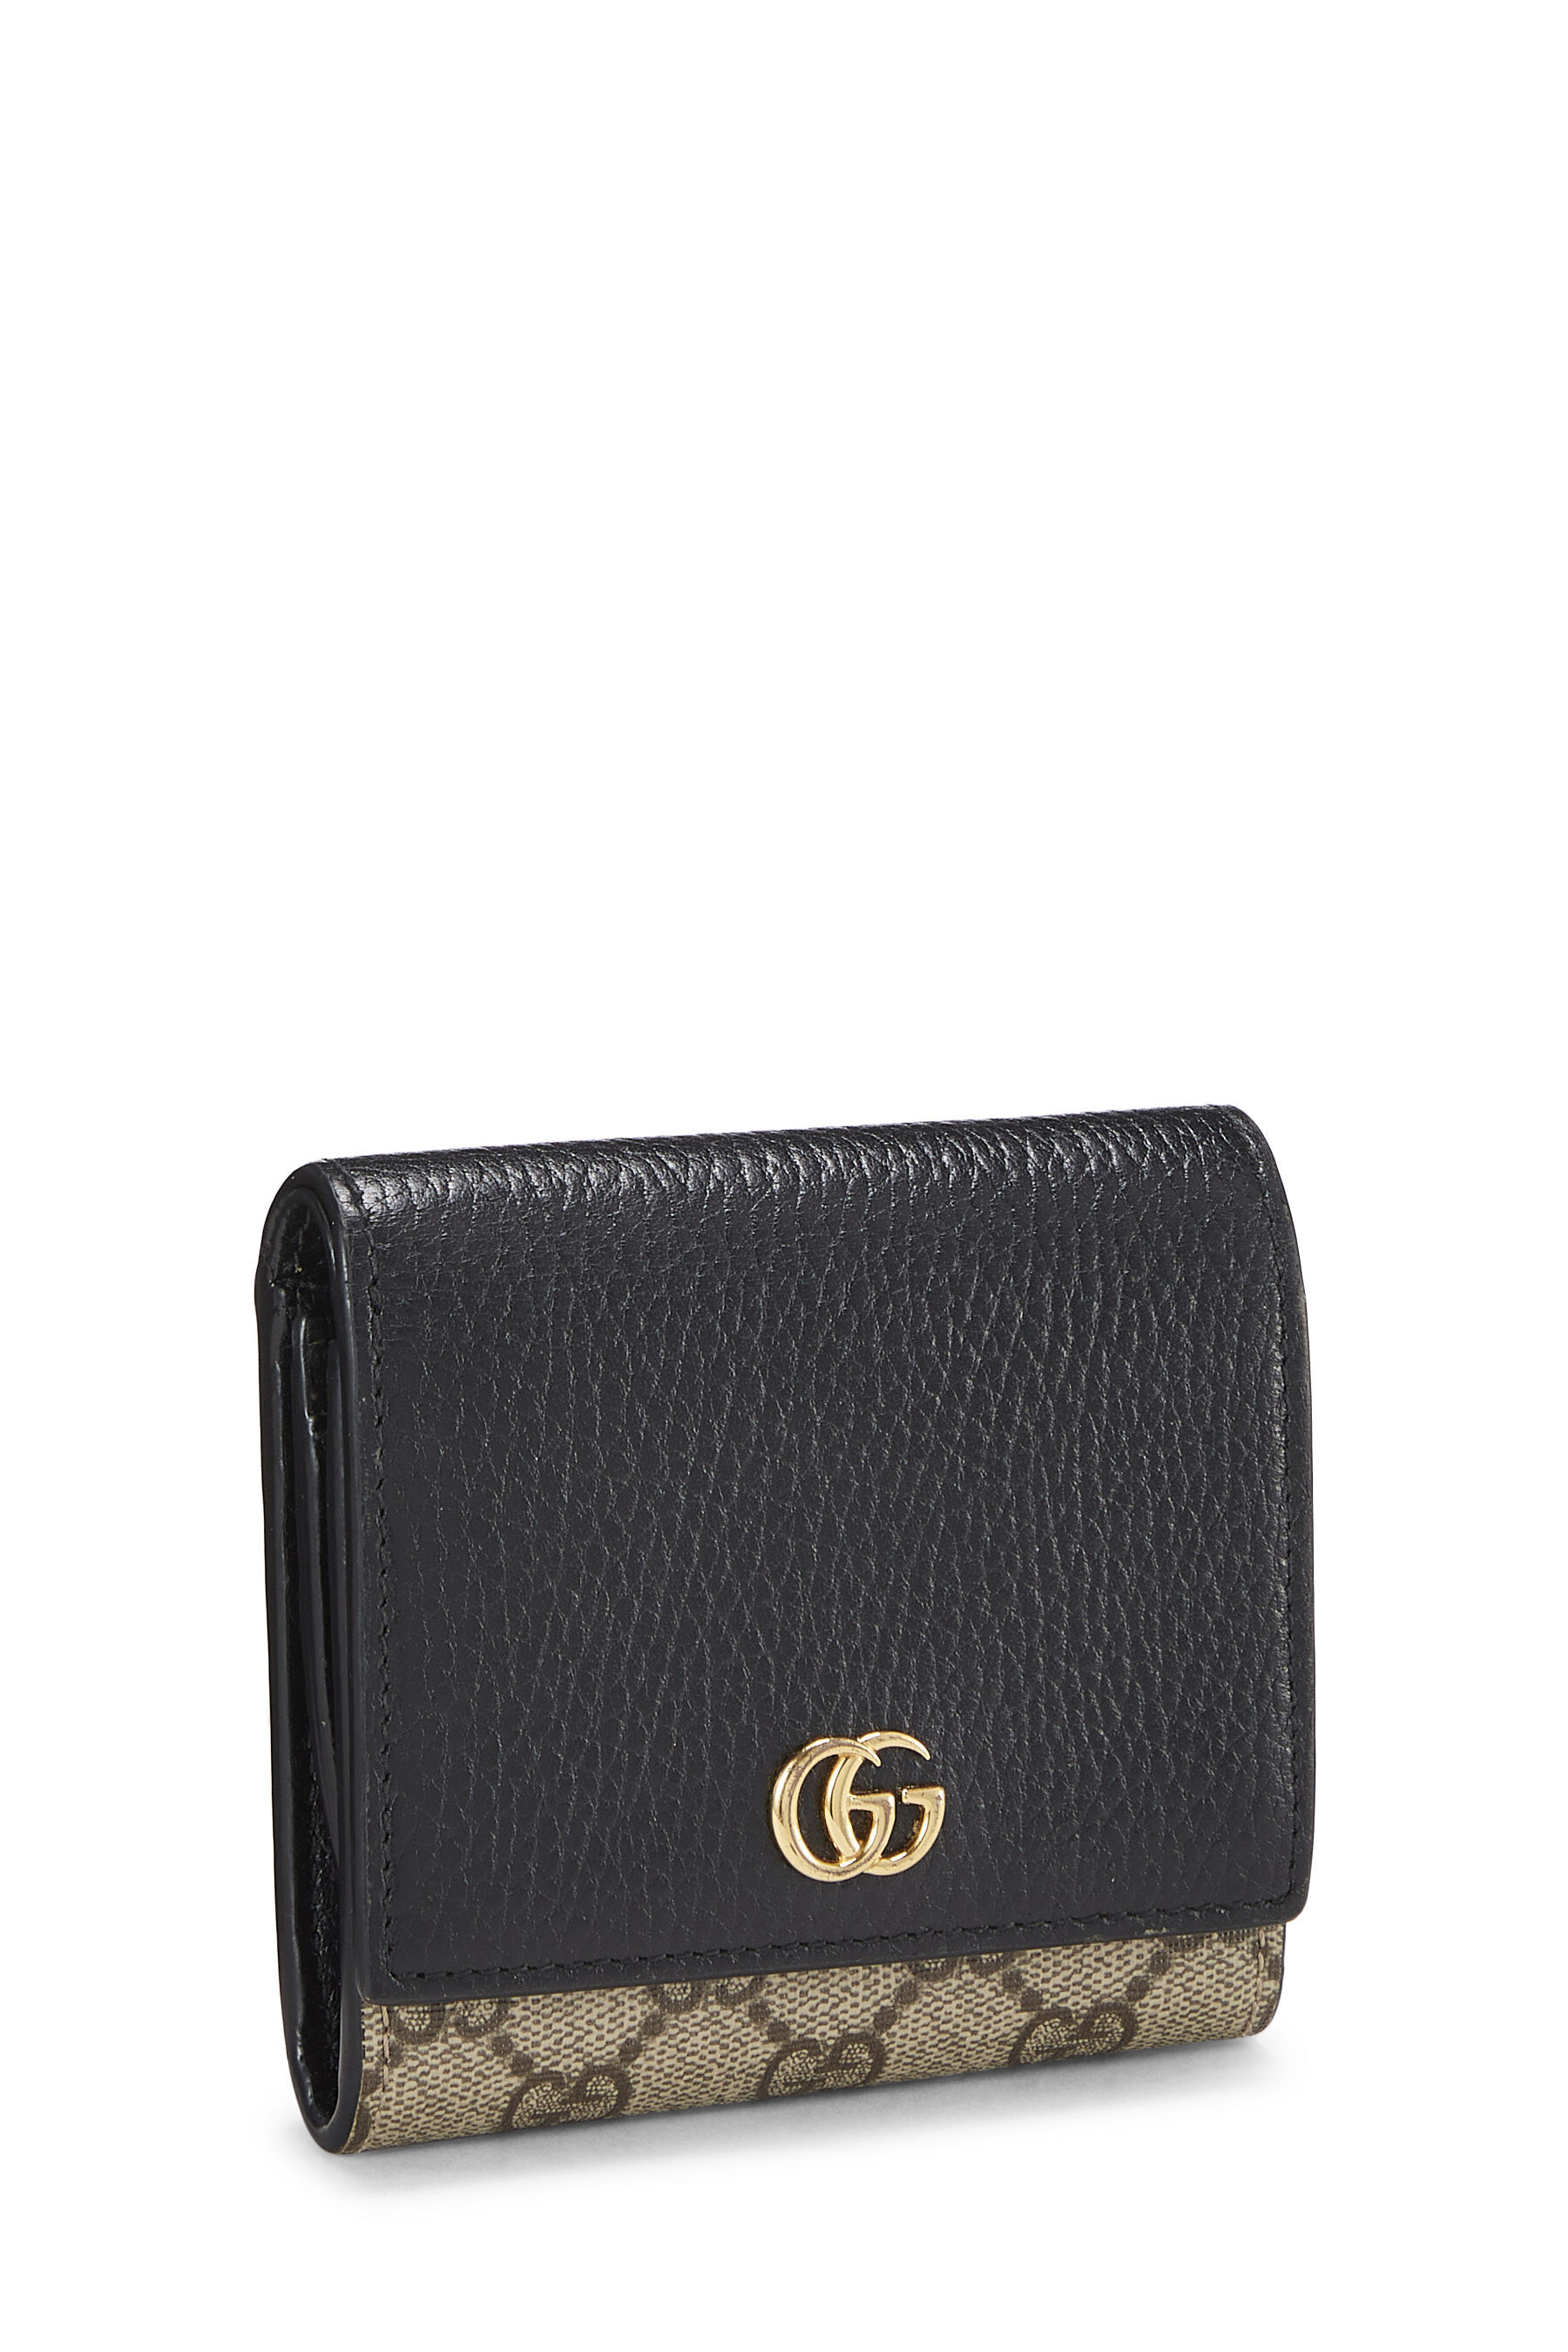 Gucci Burgundy Leather GG Interlocking French Wallet Gucci | TLC